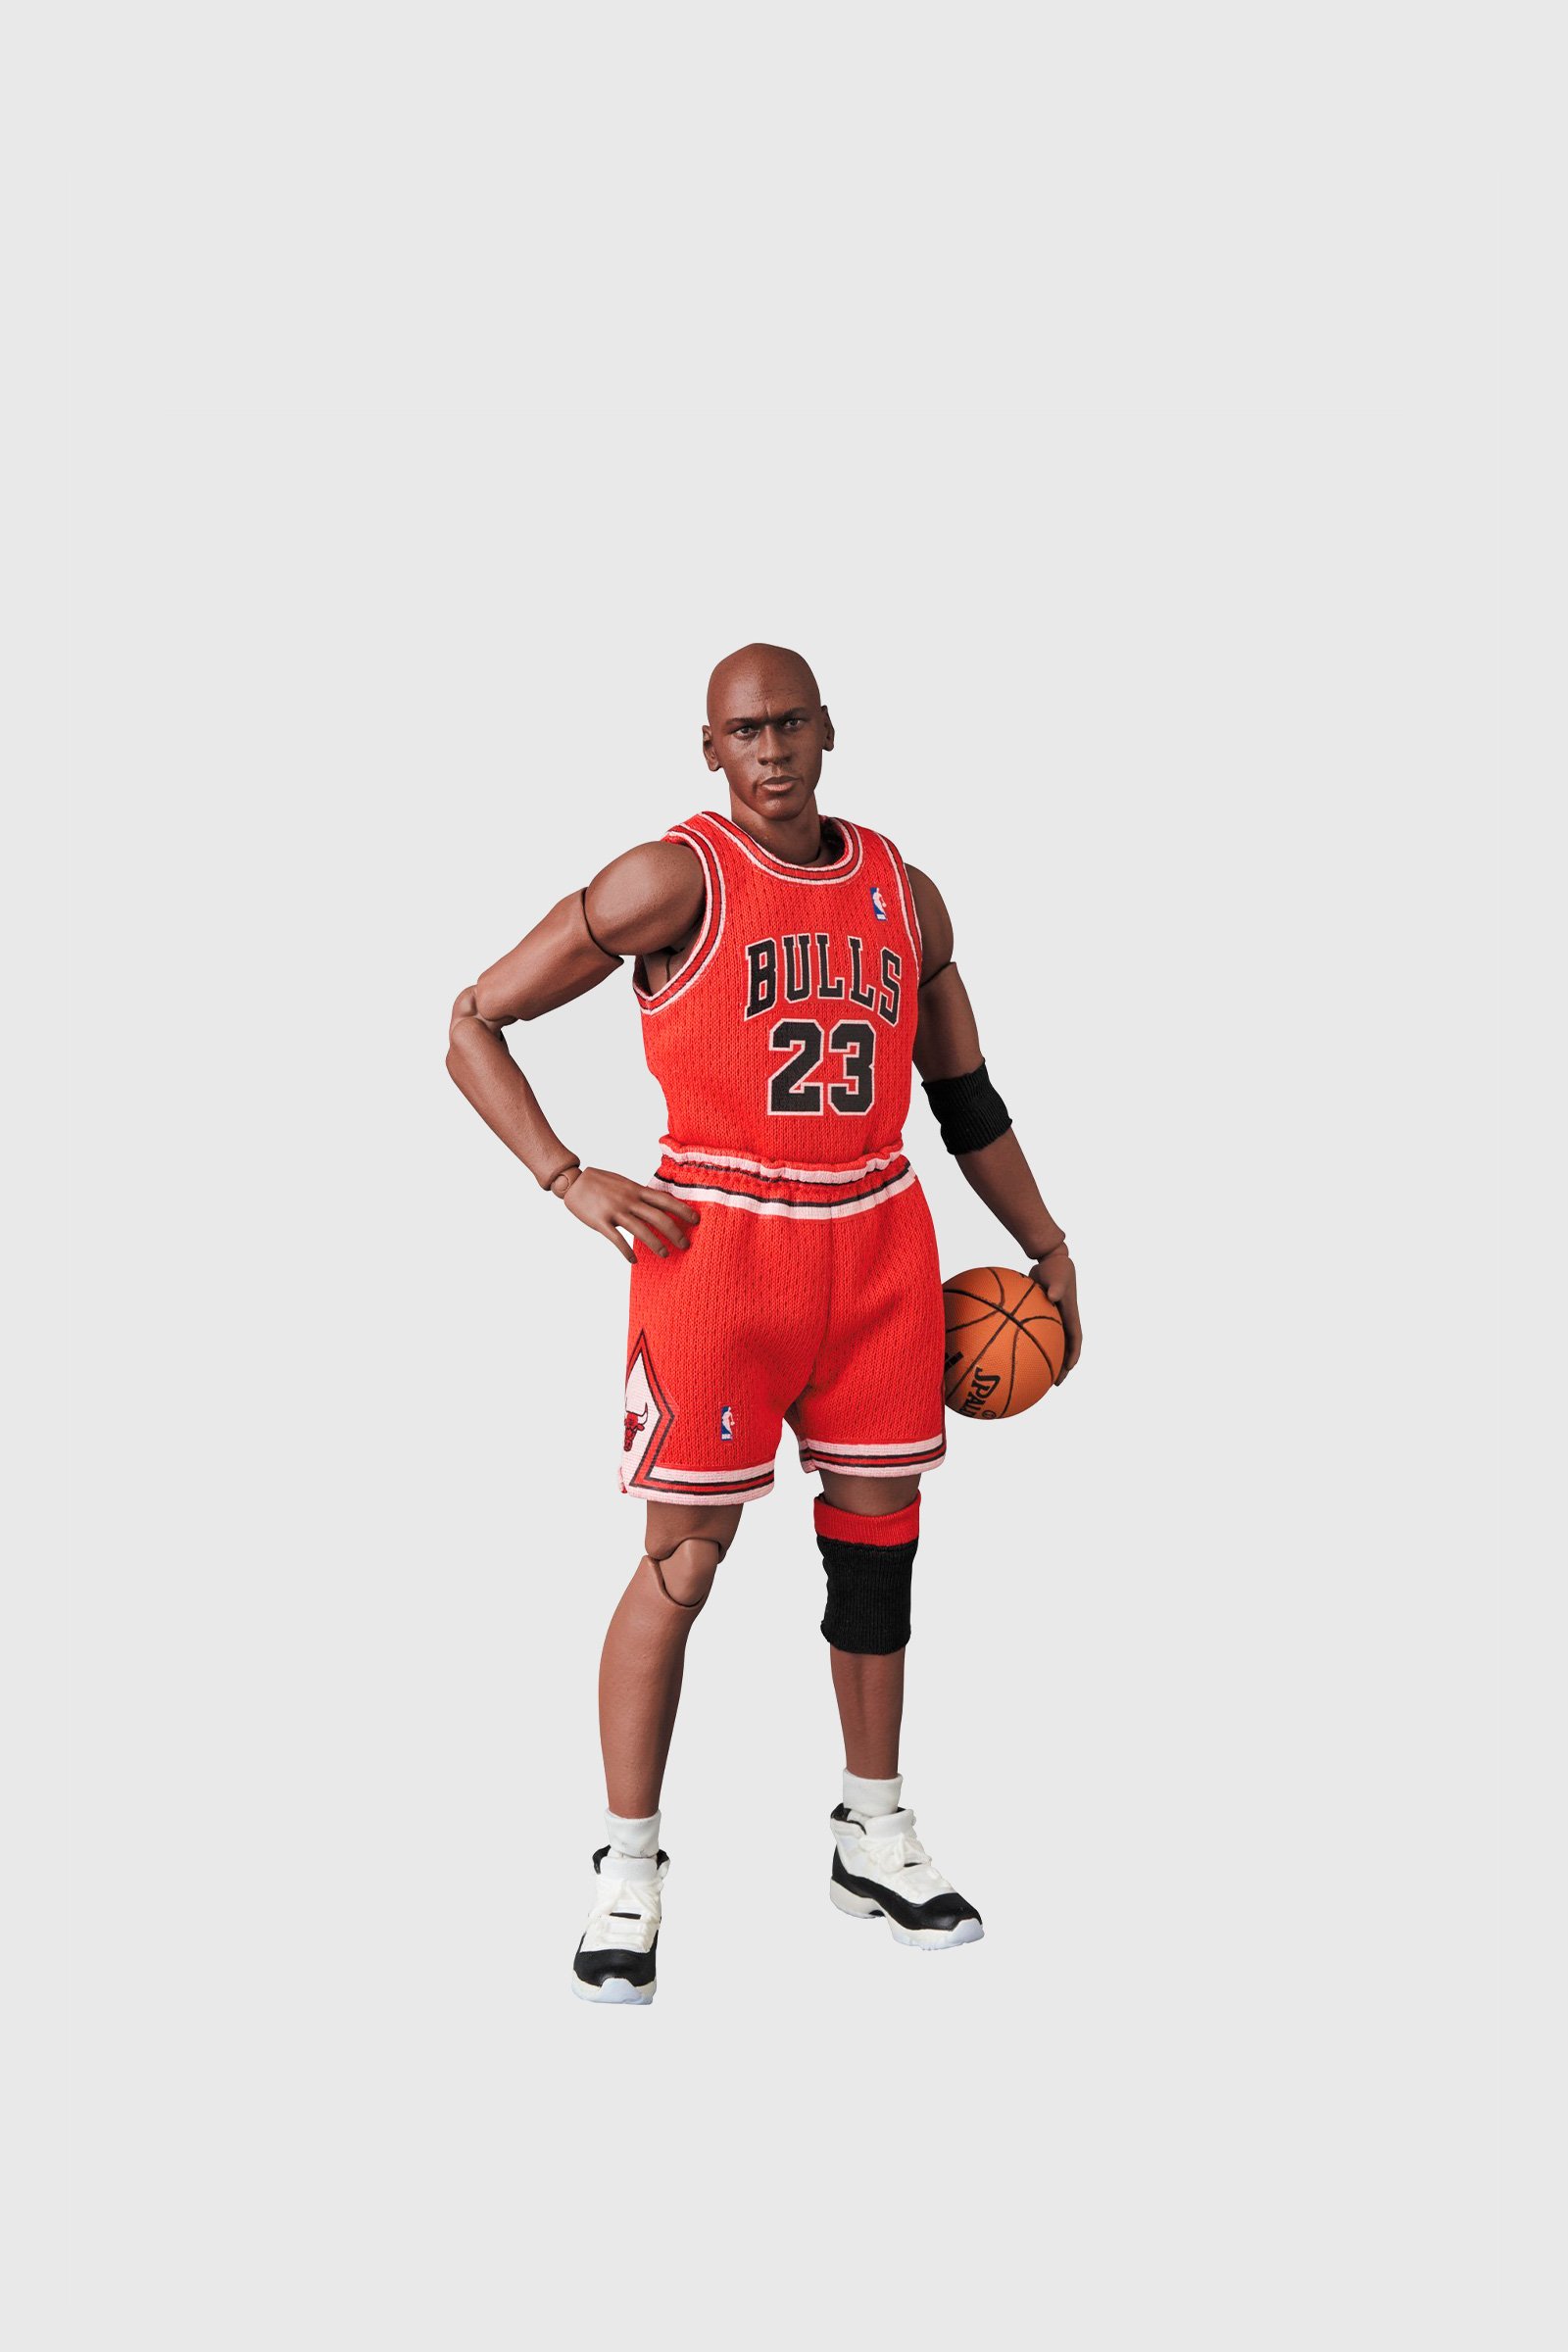 wol Glans Ongelofelijk Wood Wood - Mafex Michael Jordan - Chicago Bulls